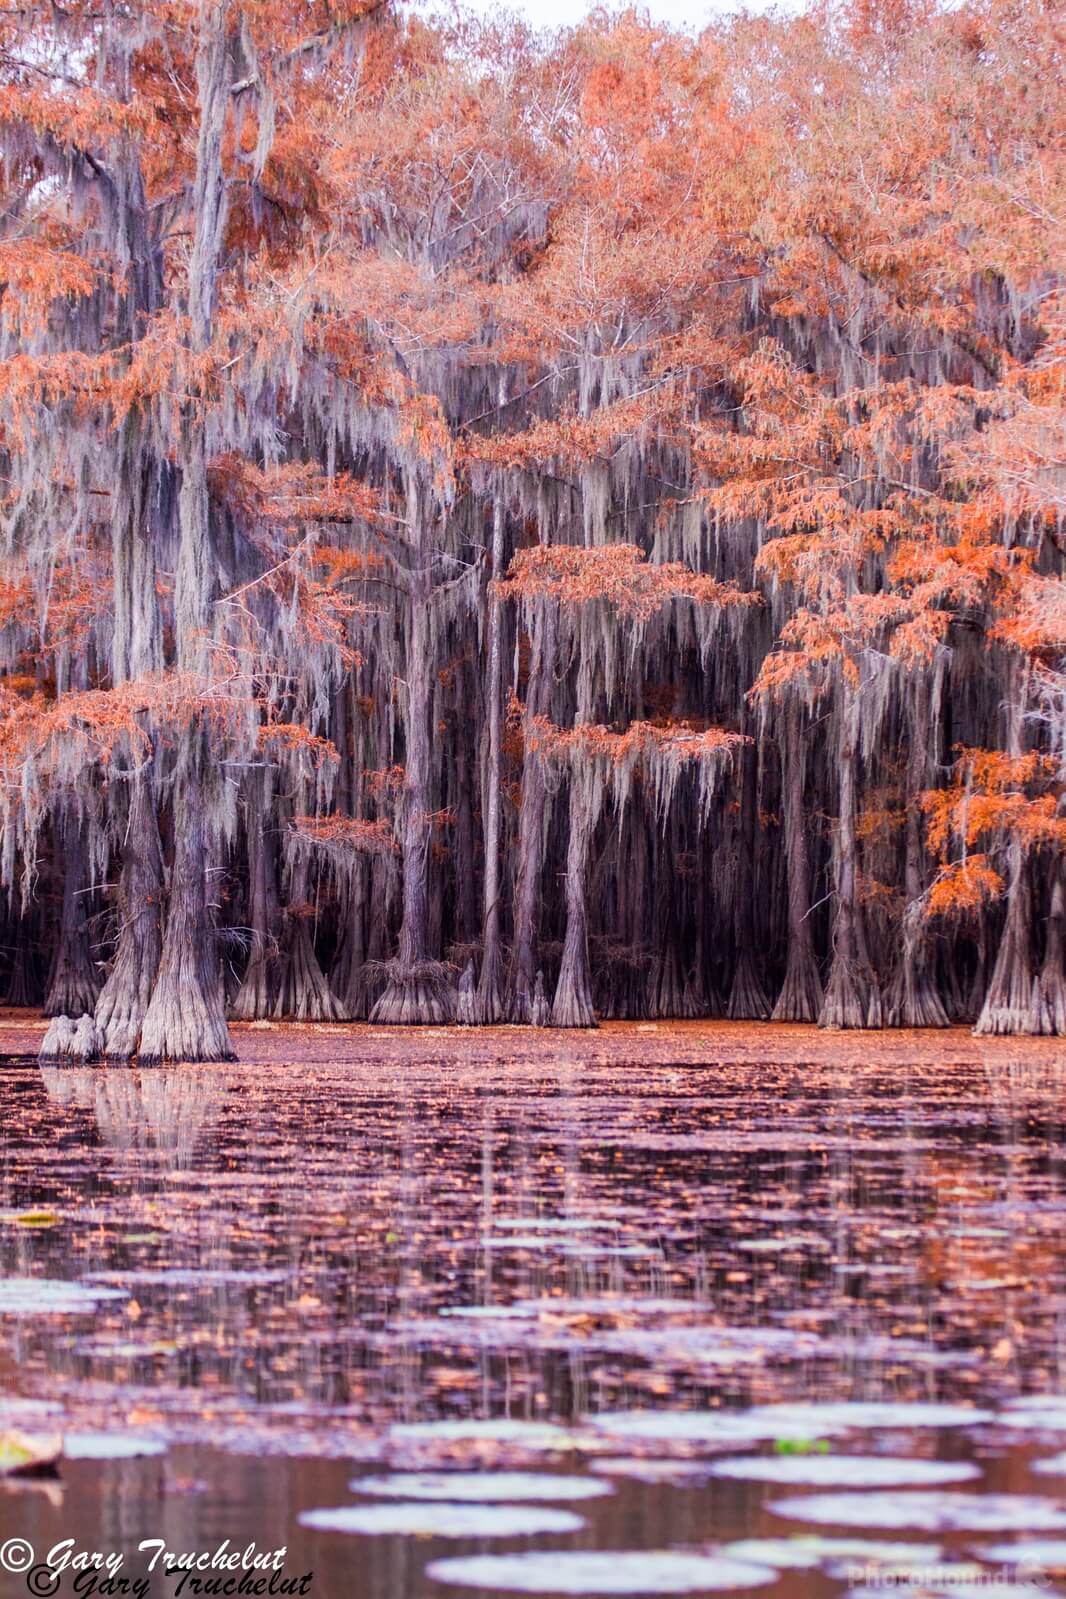 Image of Caddo Lake by Gary Truchelut